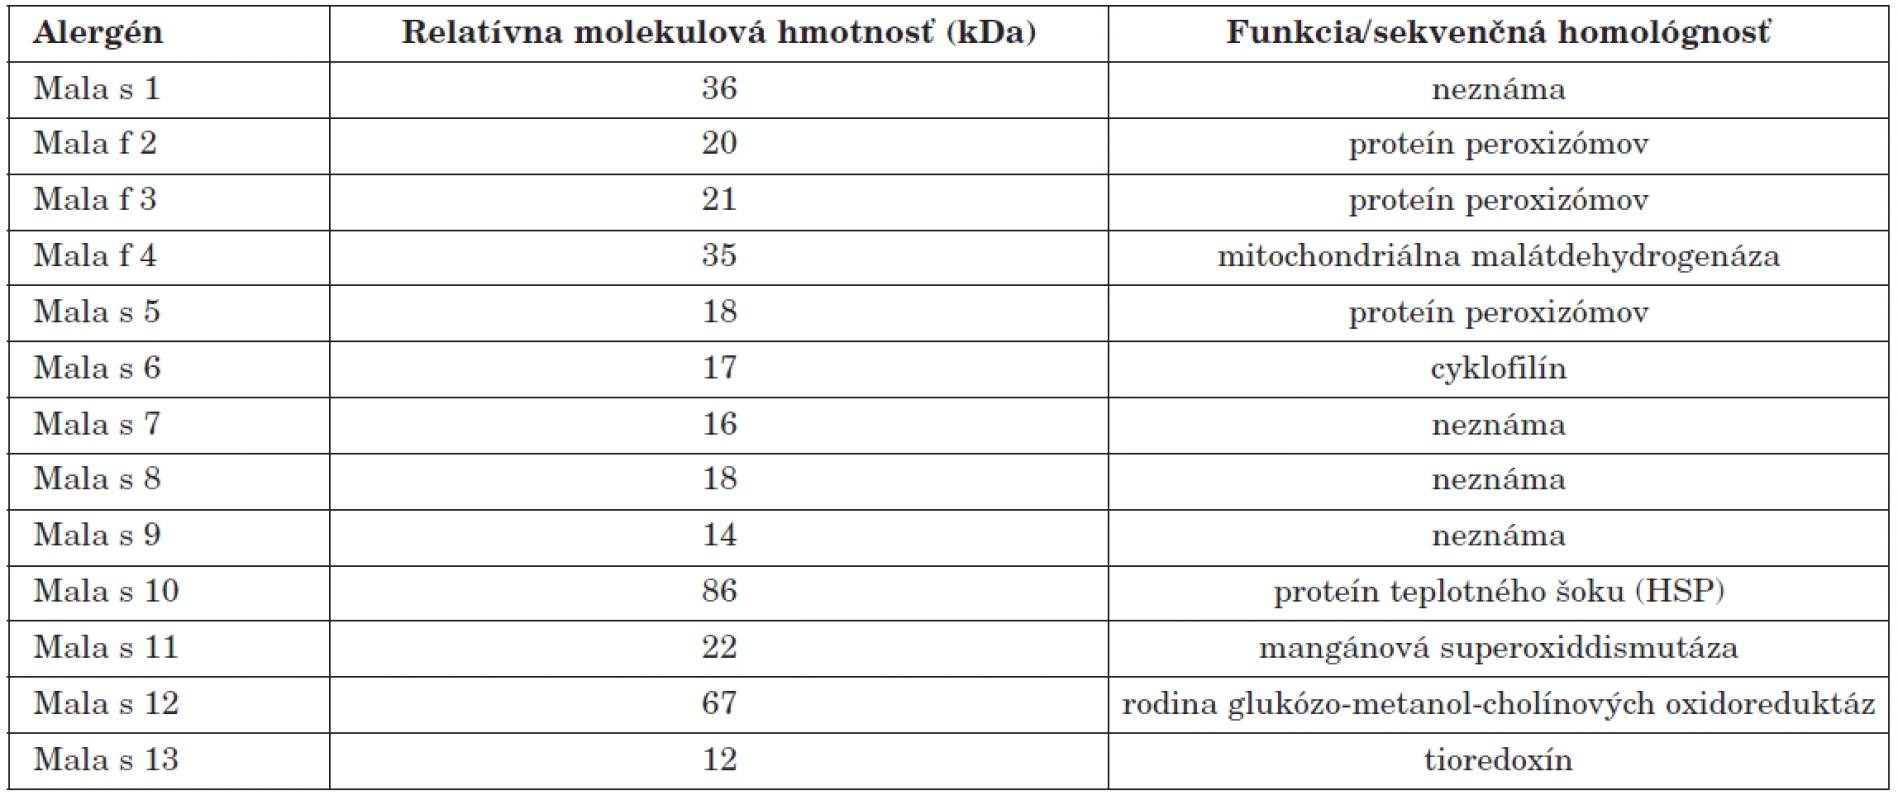 Definované alergény kvasiniek rodu Malassezia (podľa [40])
Table 1. Defined allergens of Malassezia species (adapted from [40])